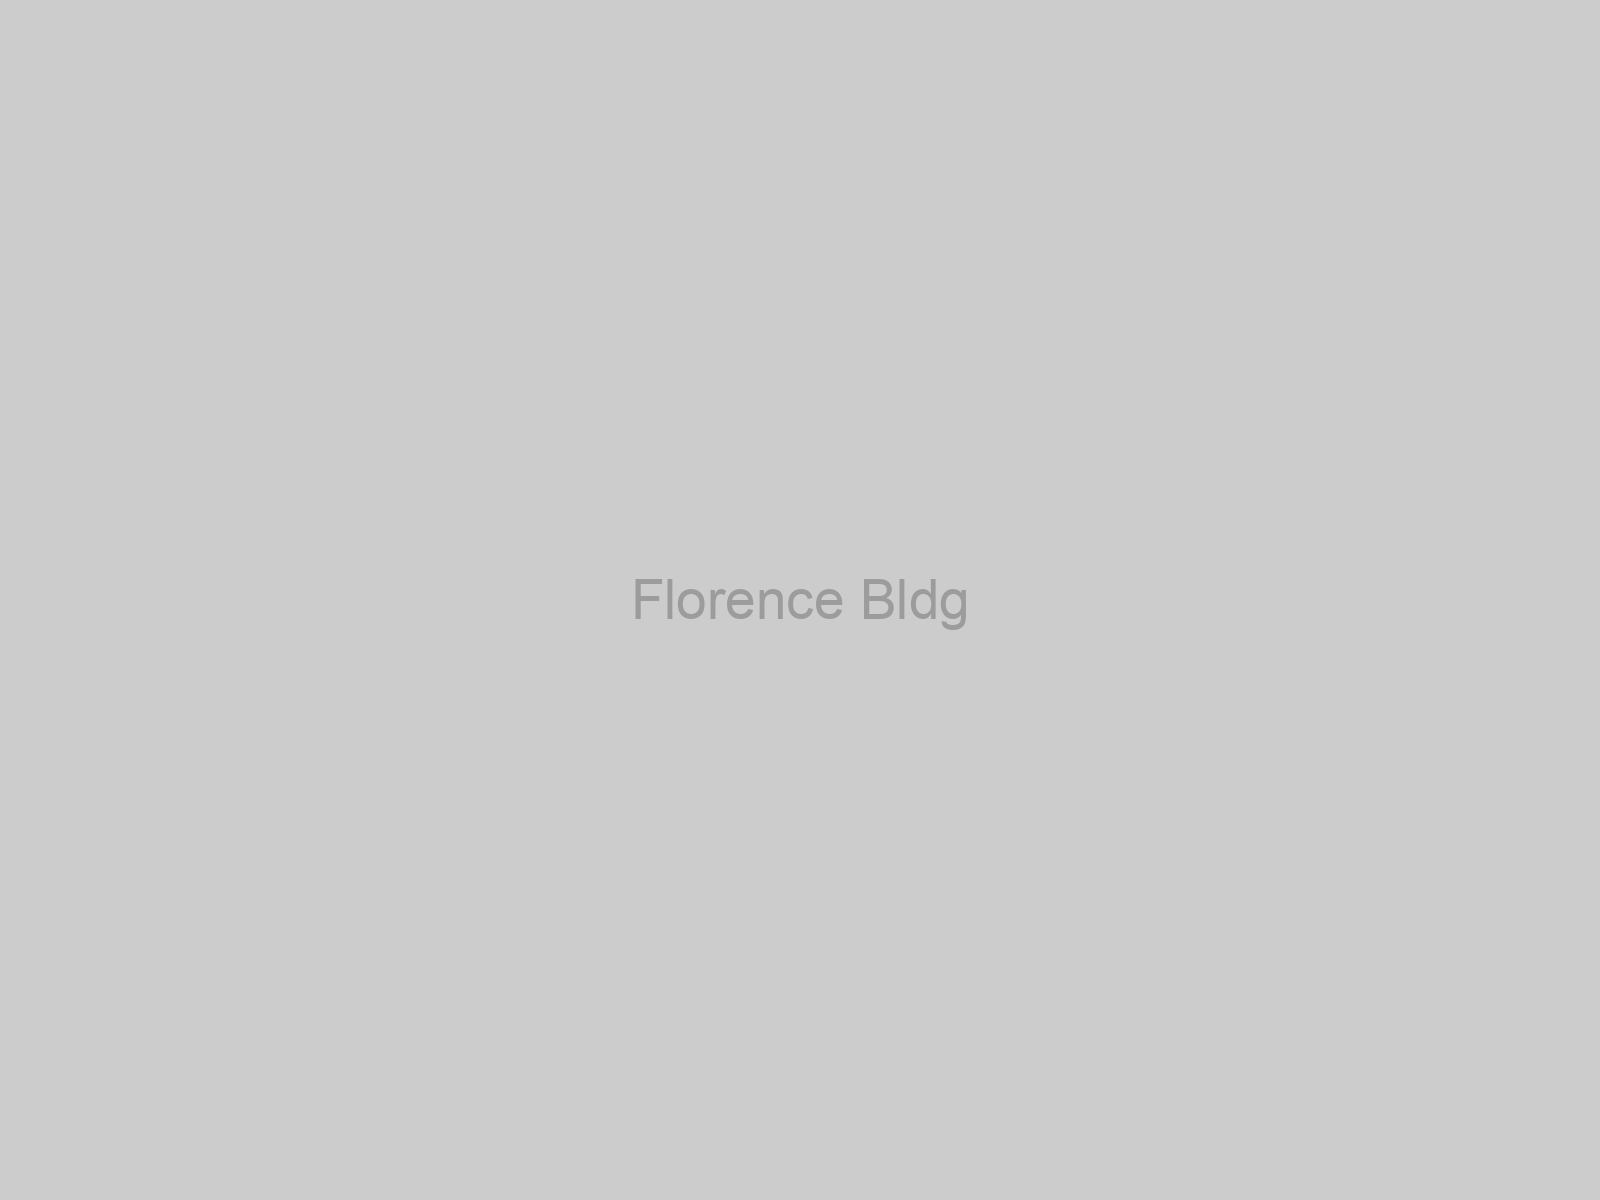 Florence Bldg